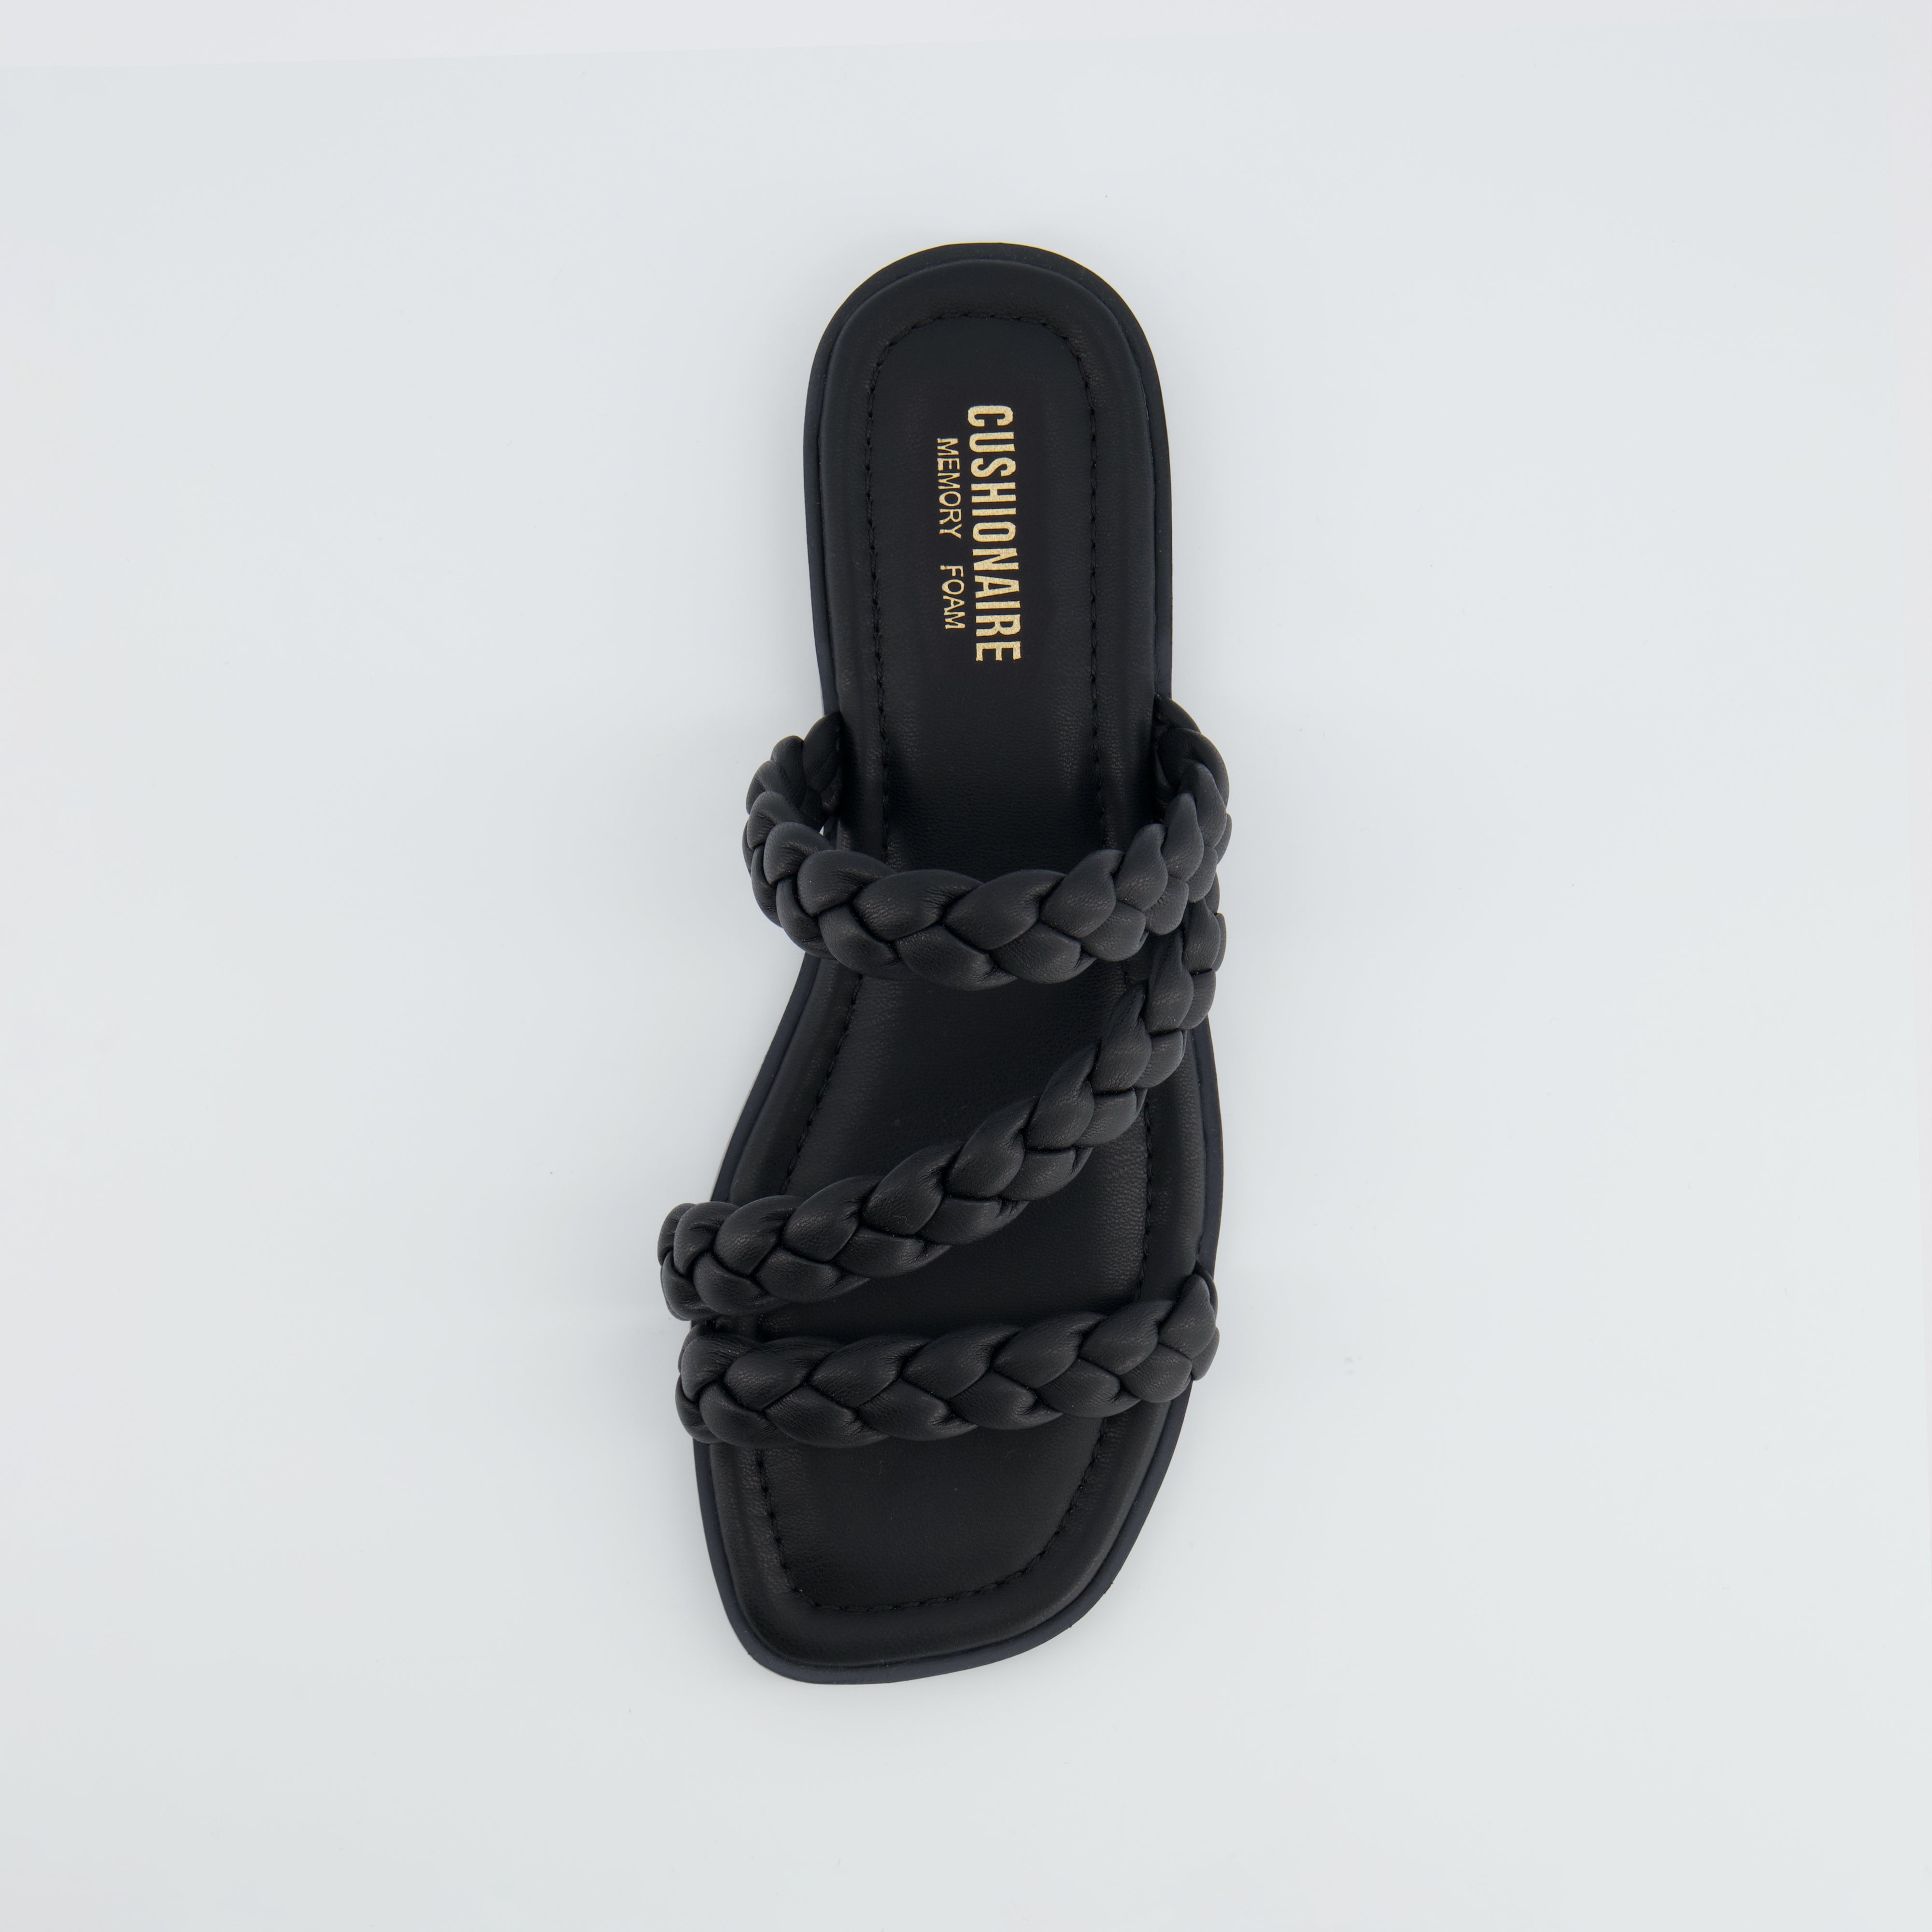 Venice Braided Slide Sandals